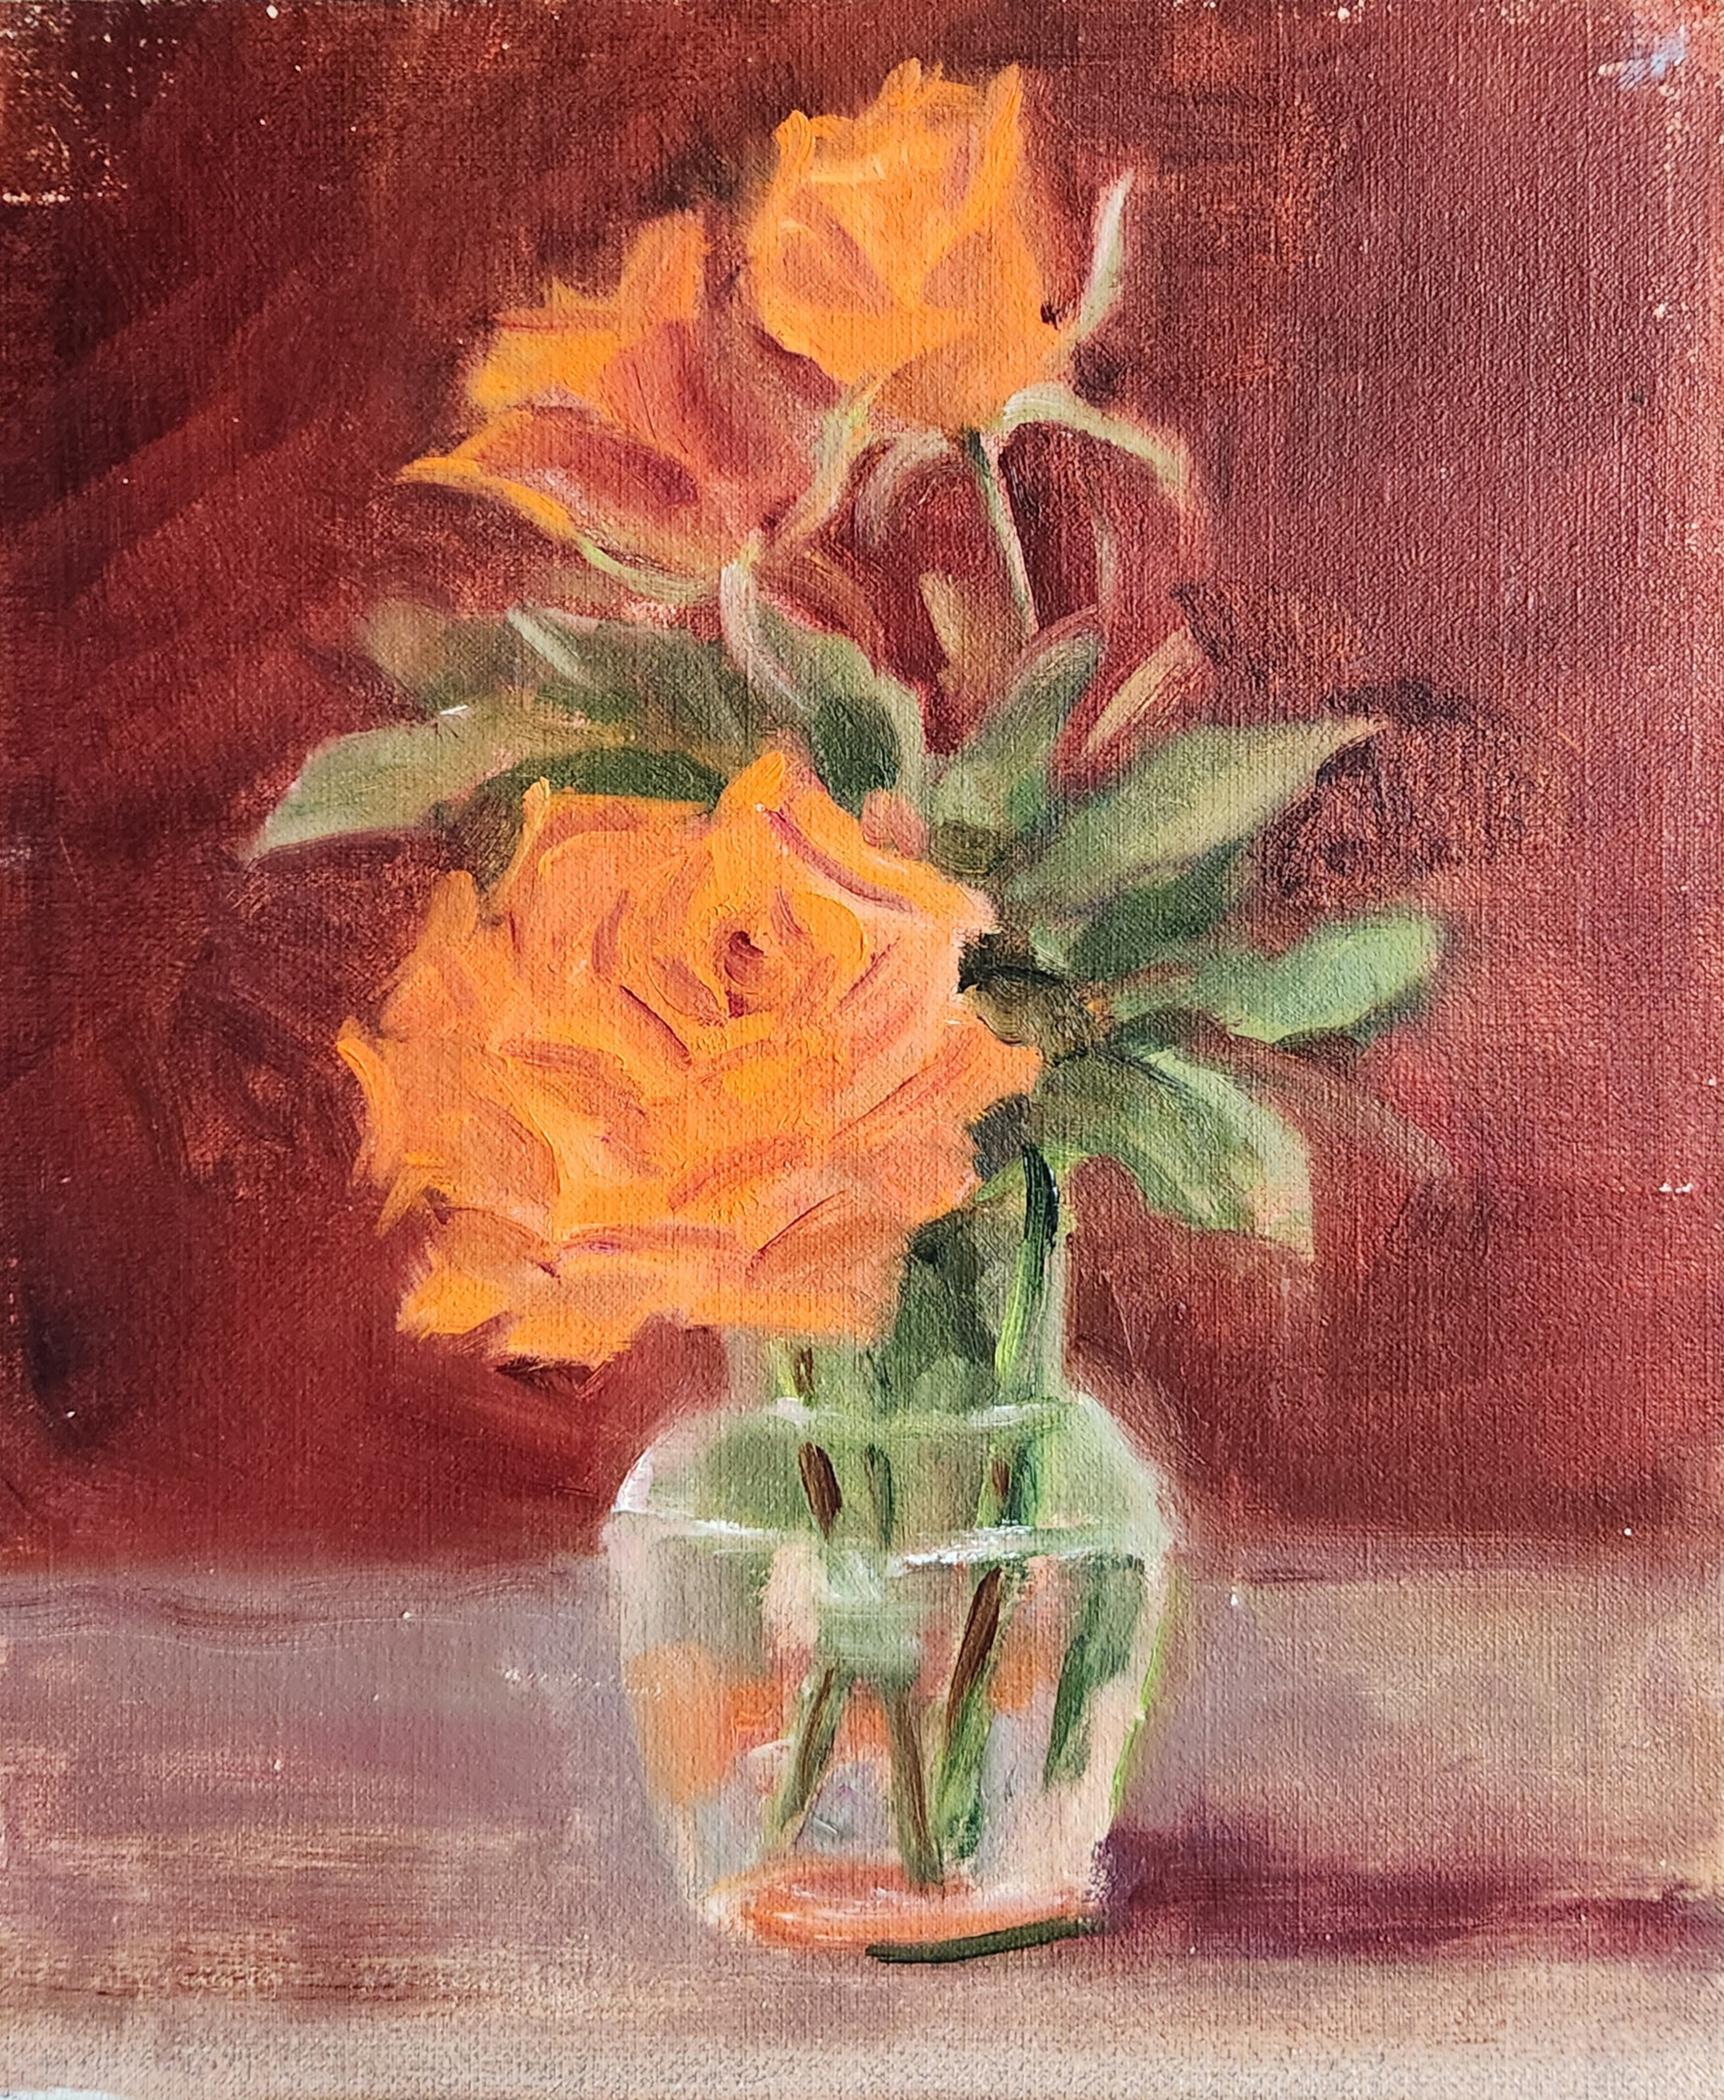 Sweet Roses, 10x8" oil on board - Painting by Lu Haskew